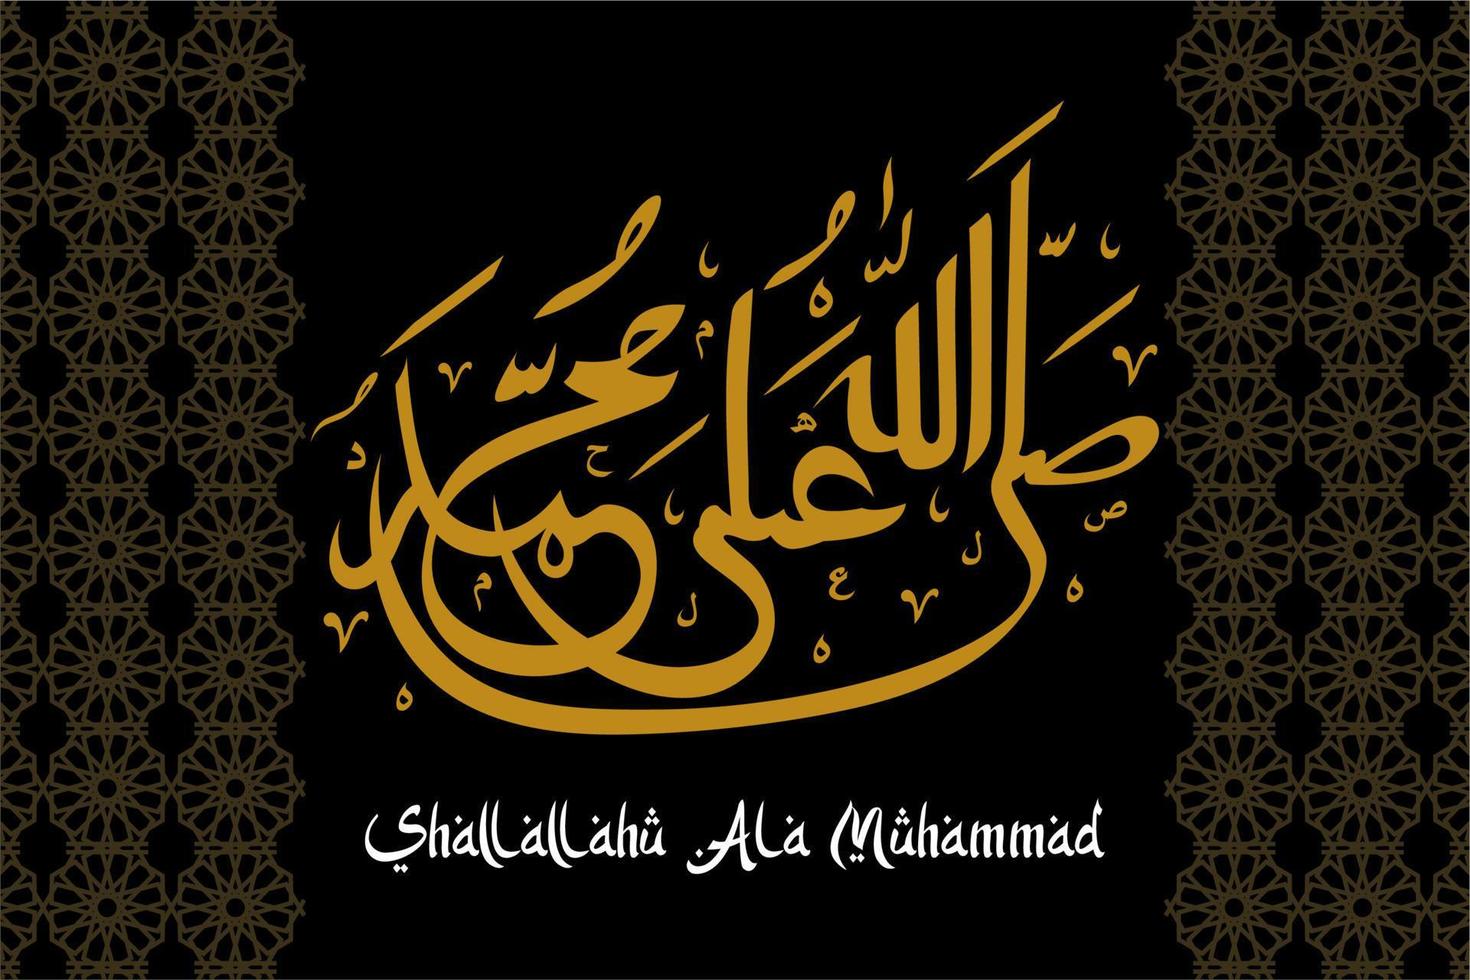 Shallahu ala muhammad arabische kalligrafie vertaald god zegene muhammad. behang syrië vector